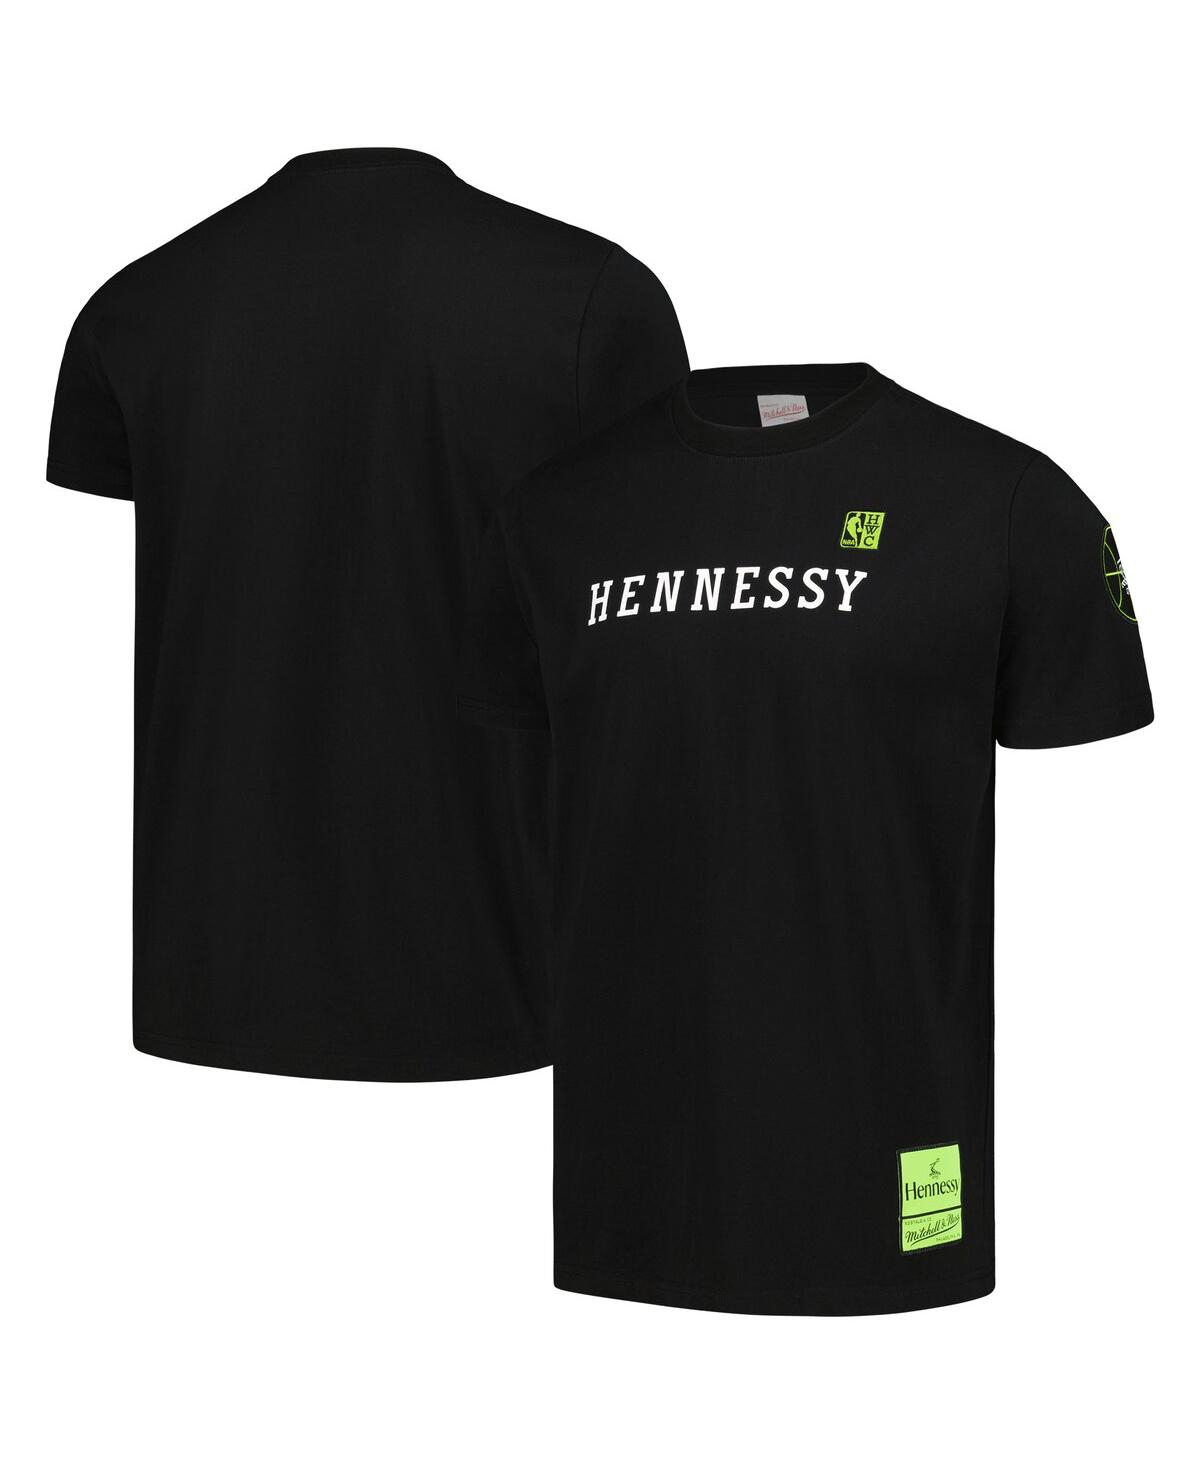 Mitchell Ness Men's Black Nba x Hennessy Hardwood Classics T-Shirt - Black